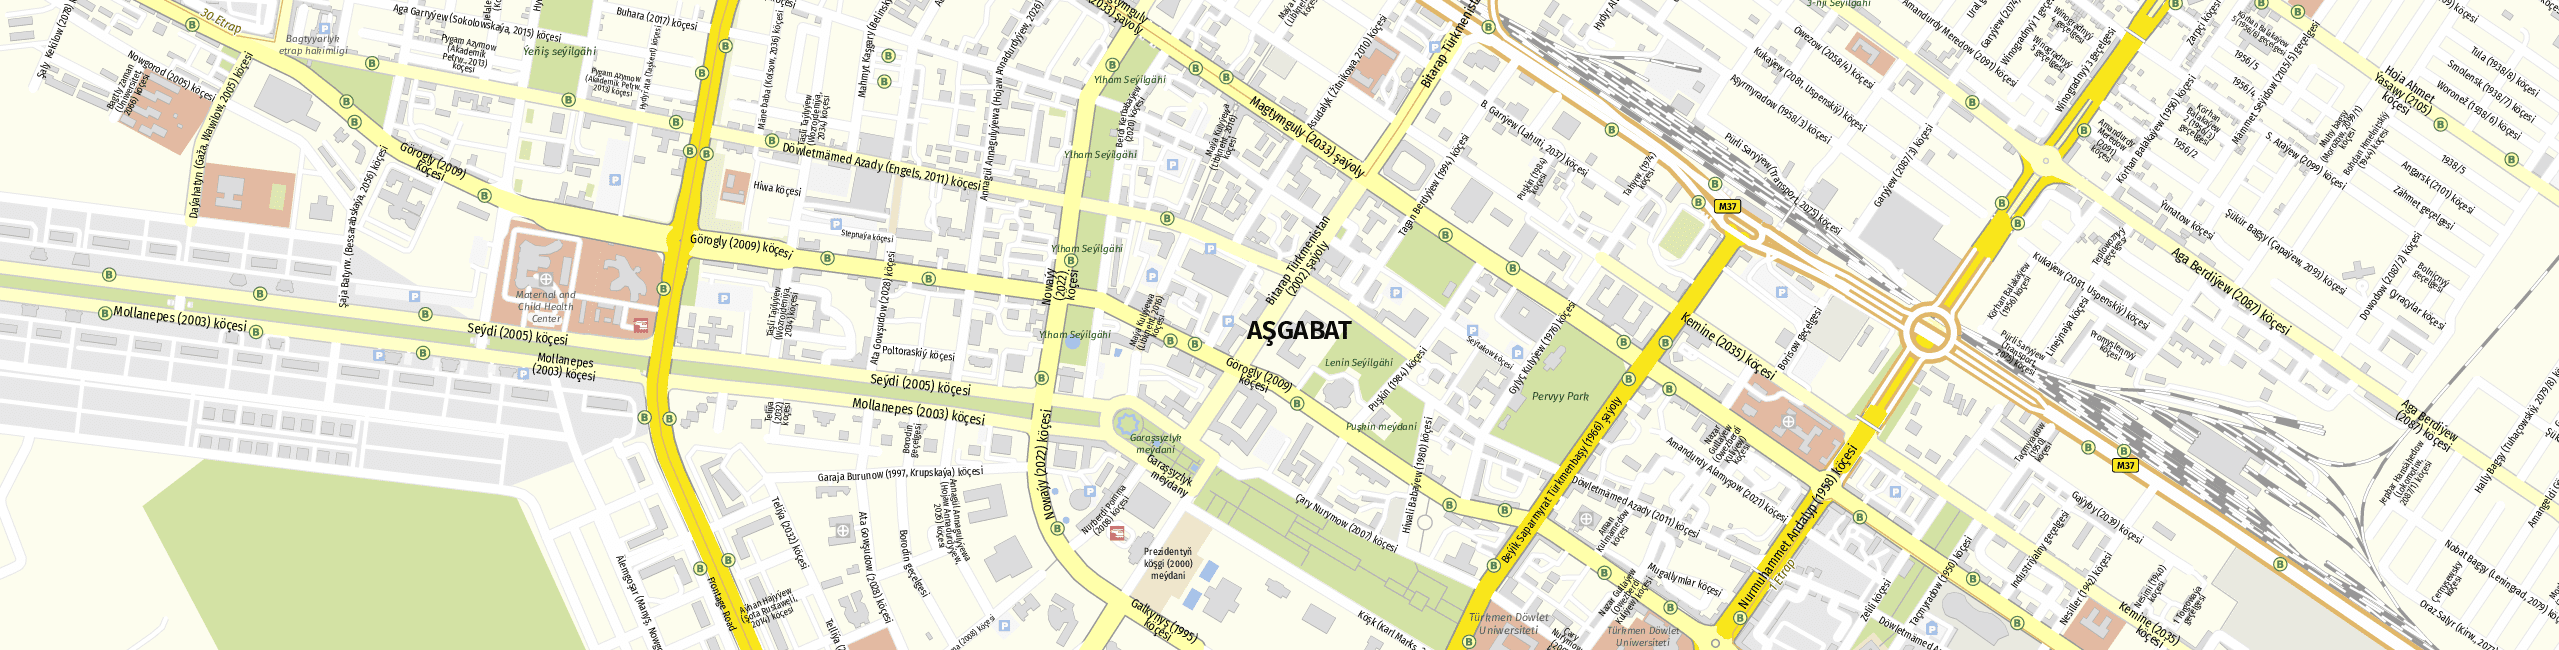 Stadtplan Aschgabat zum Downloaden.